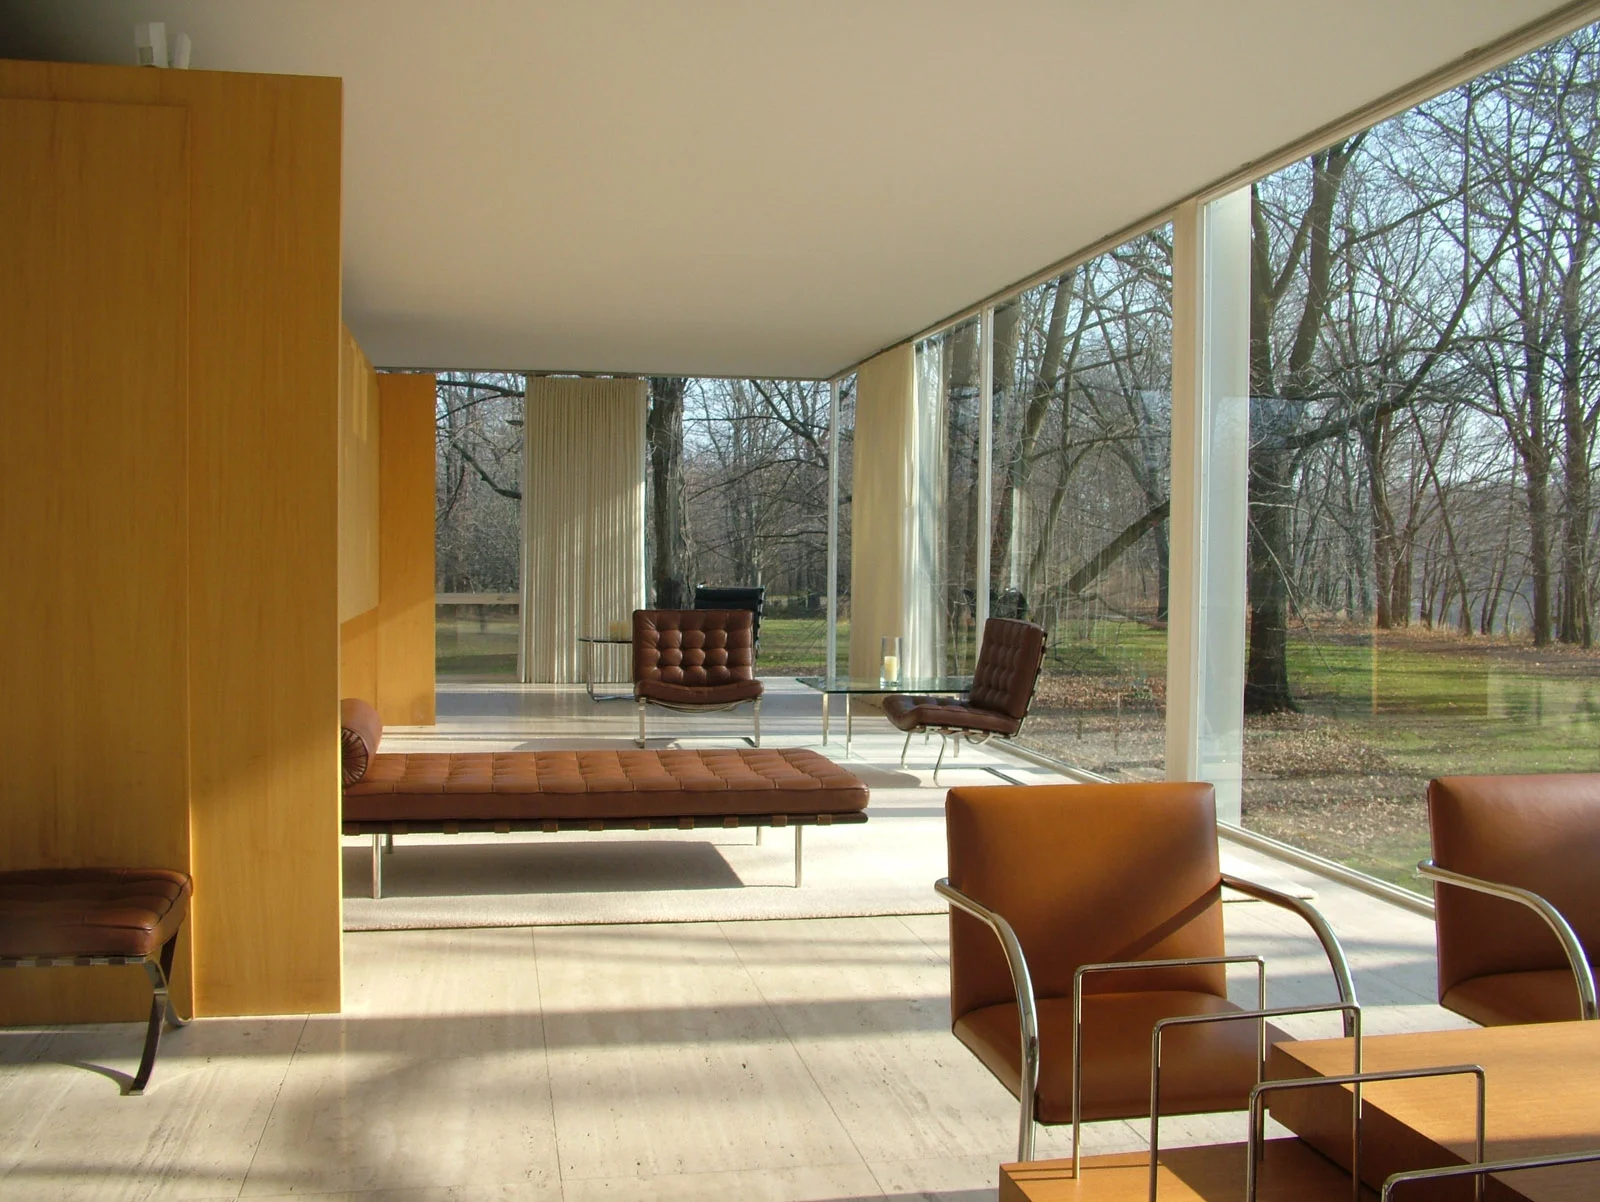 Furniture Design by Mies van der Rohe